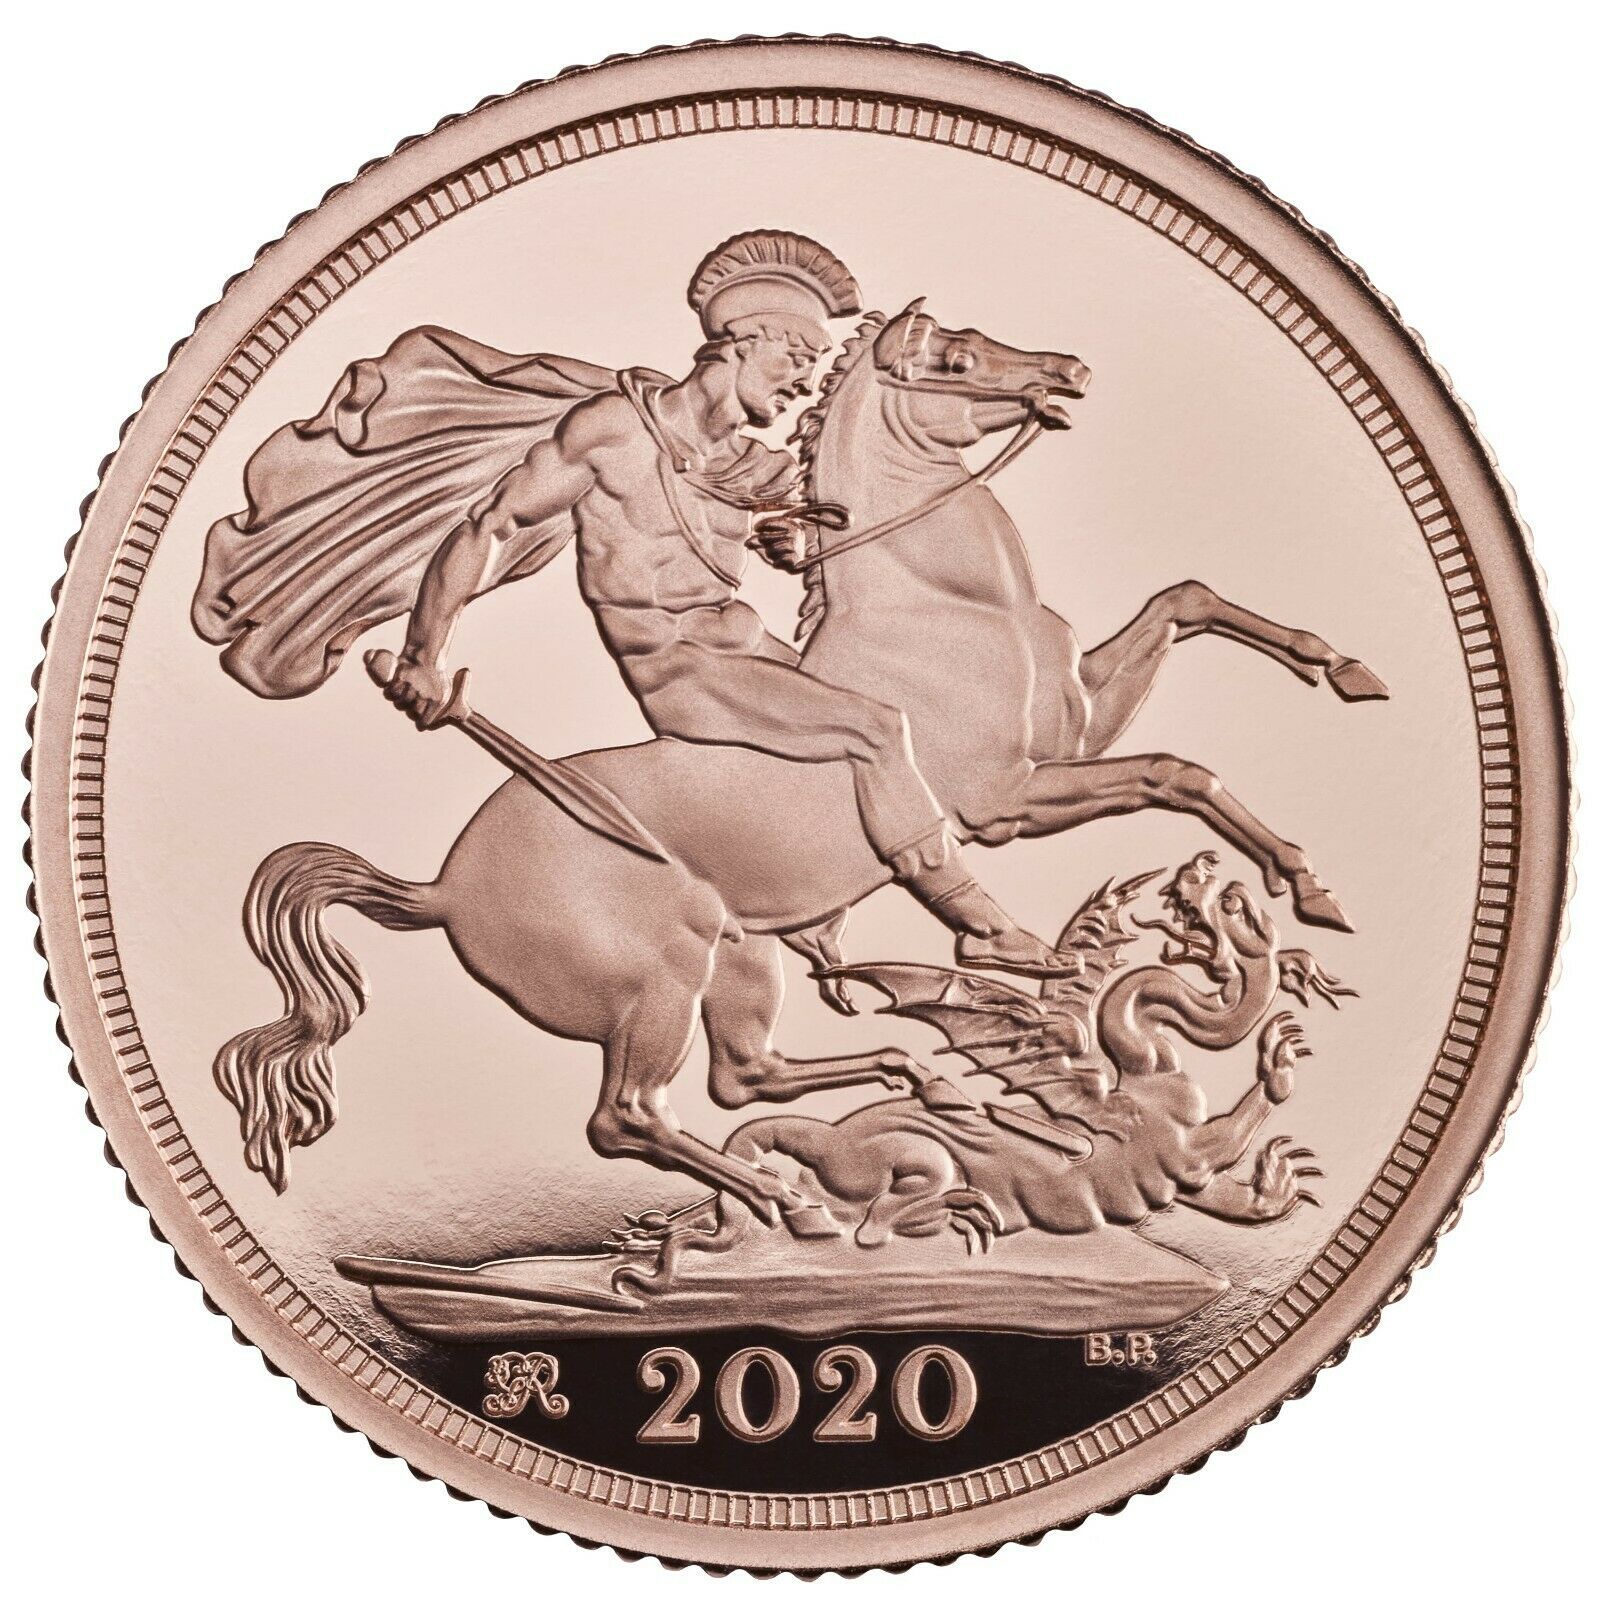 British Full Sovereign Gold Coins